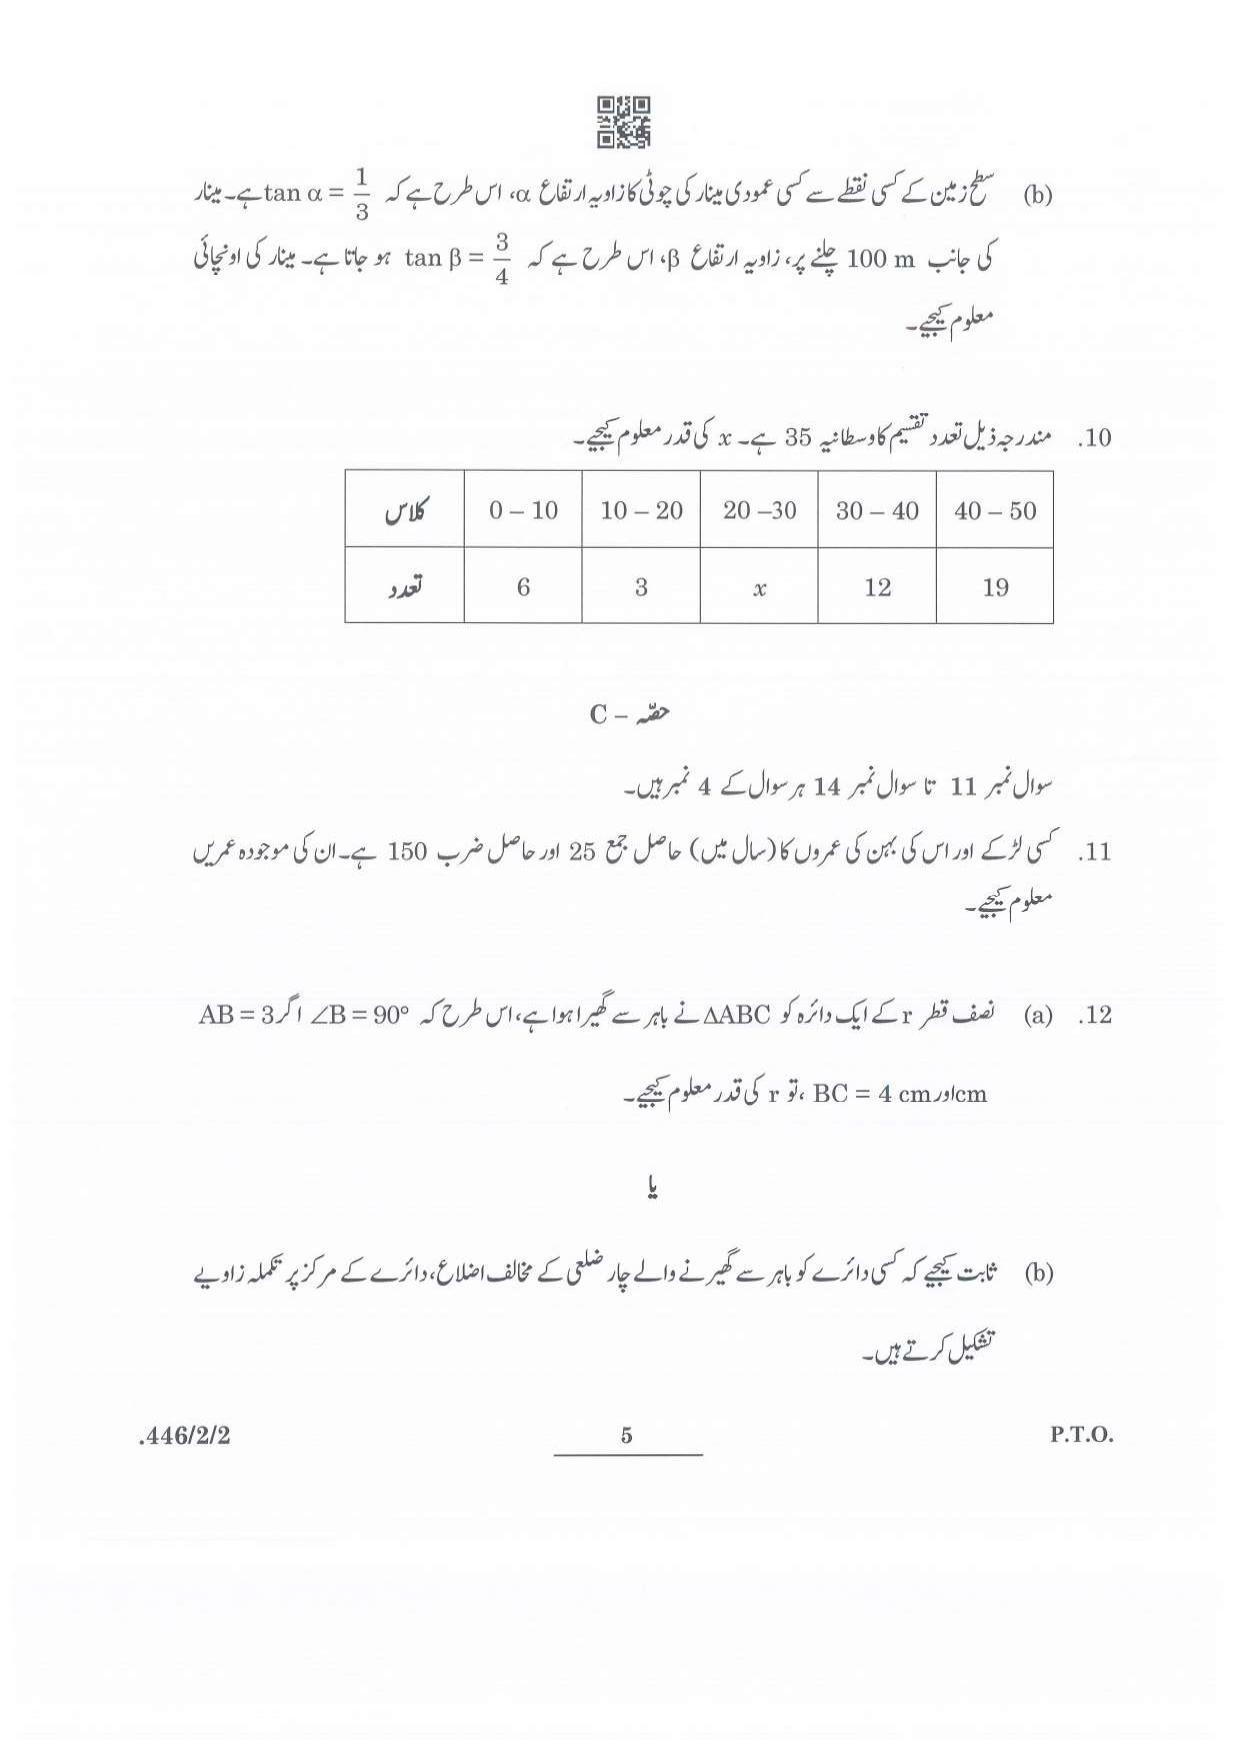 CBSE Class 10 Maths Basic - Urdu (446/2/2 - SET 2) 2022 Question Paper - Page 5